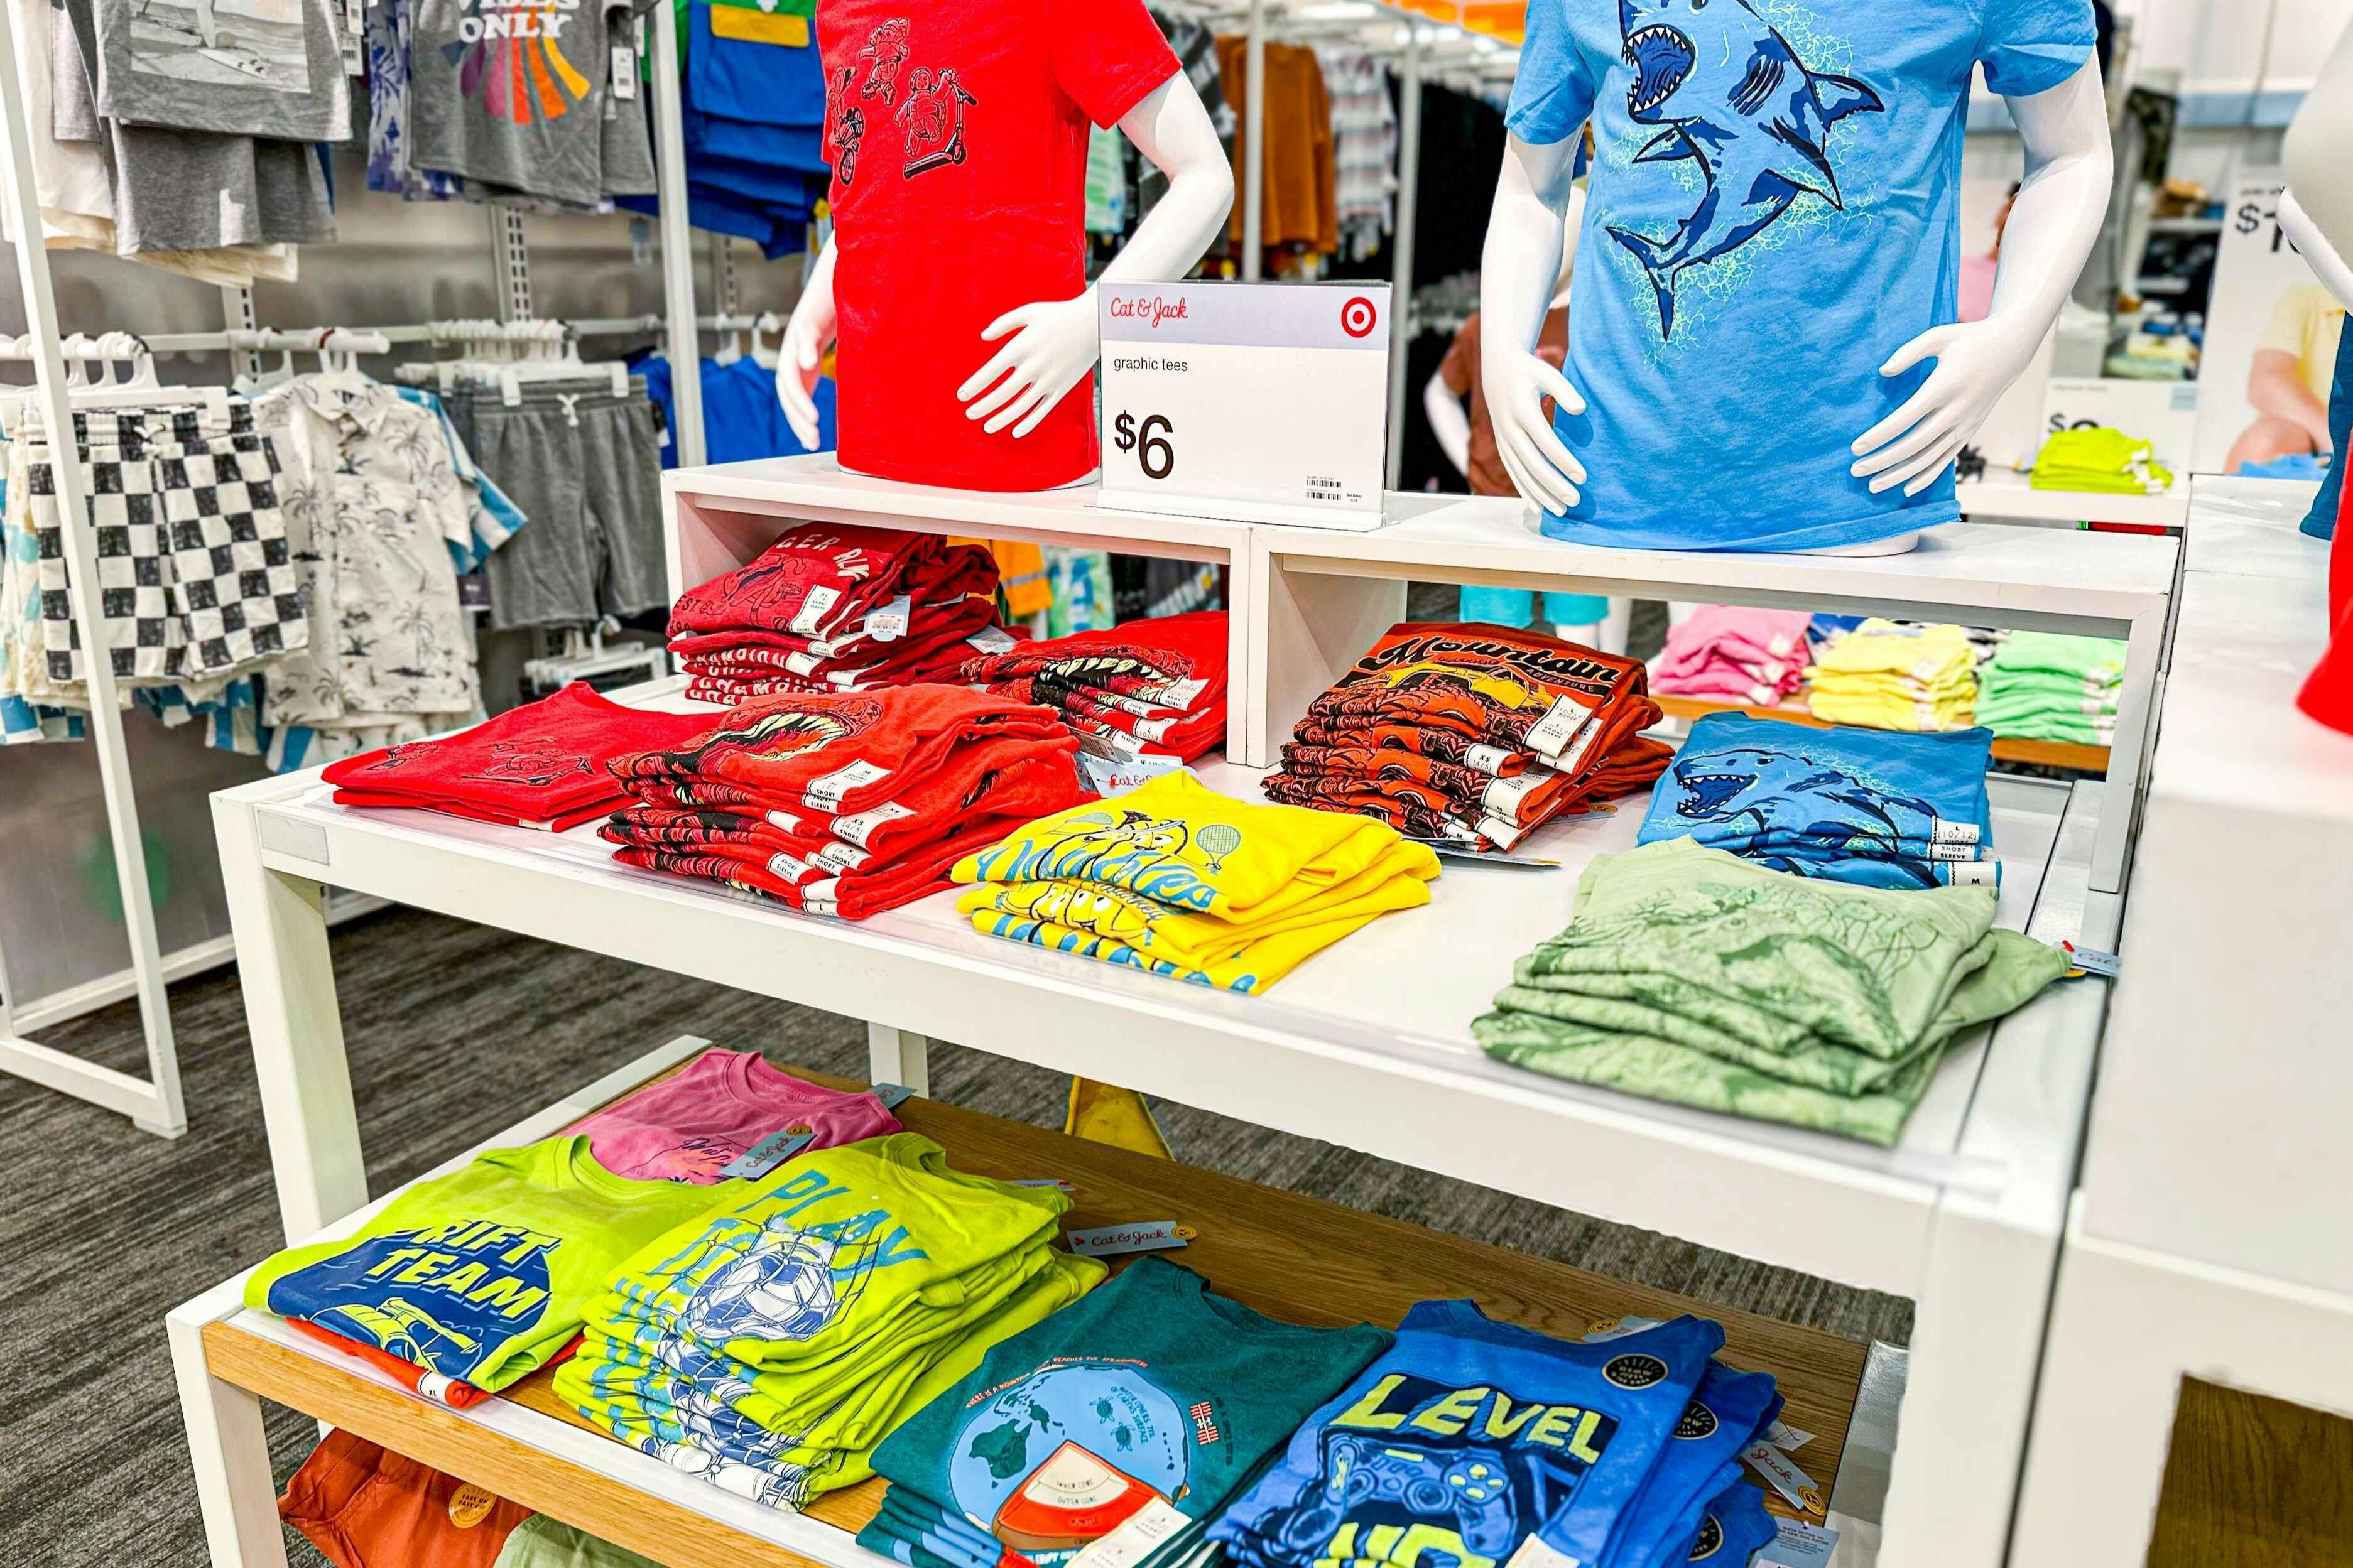 Kids' Apparel Deals at Target: $2.85 Tees or Tanks, $7 Dresses